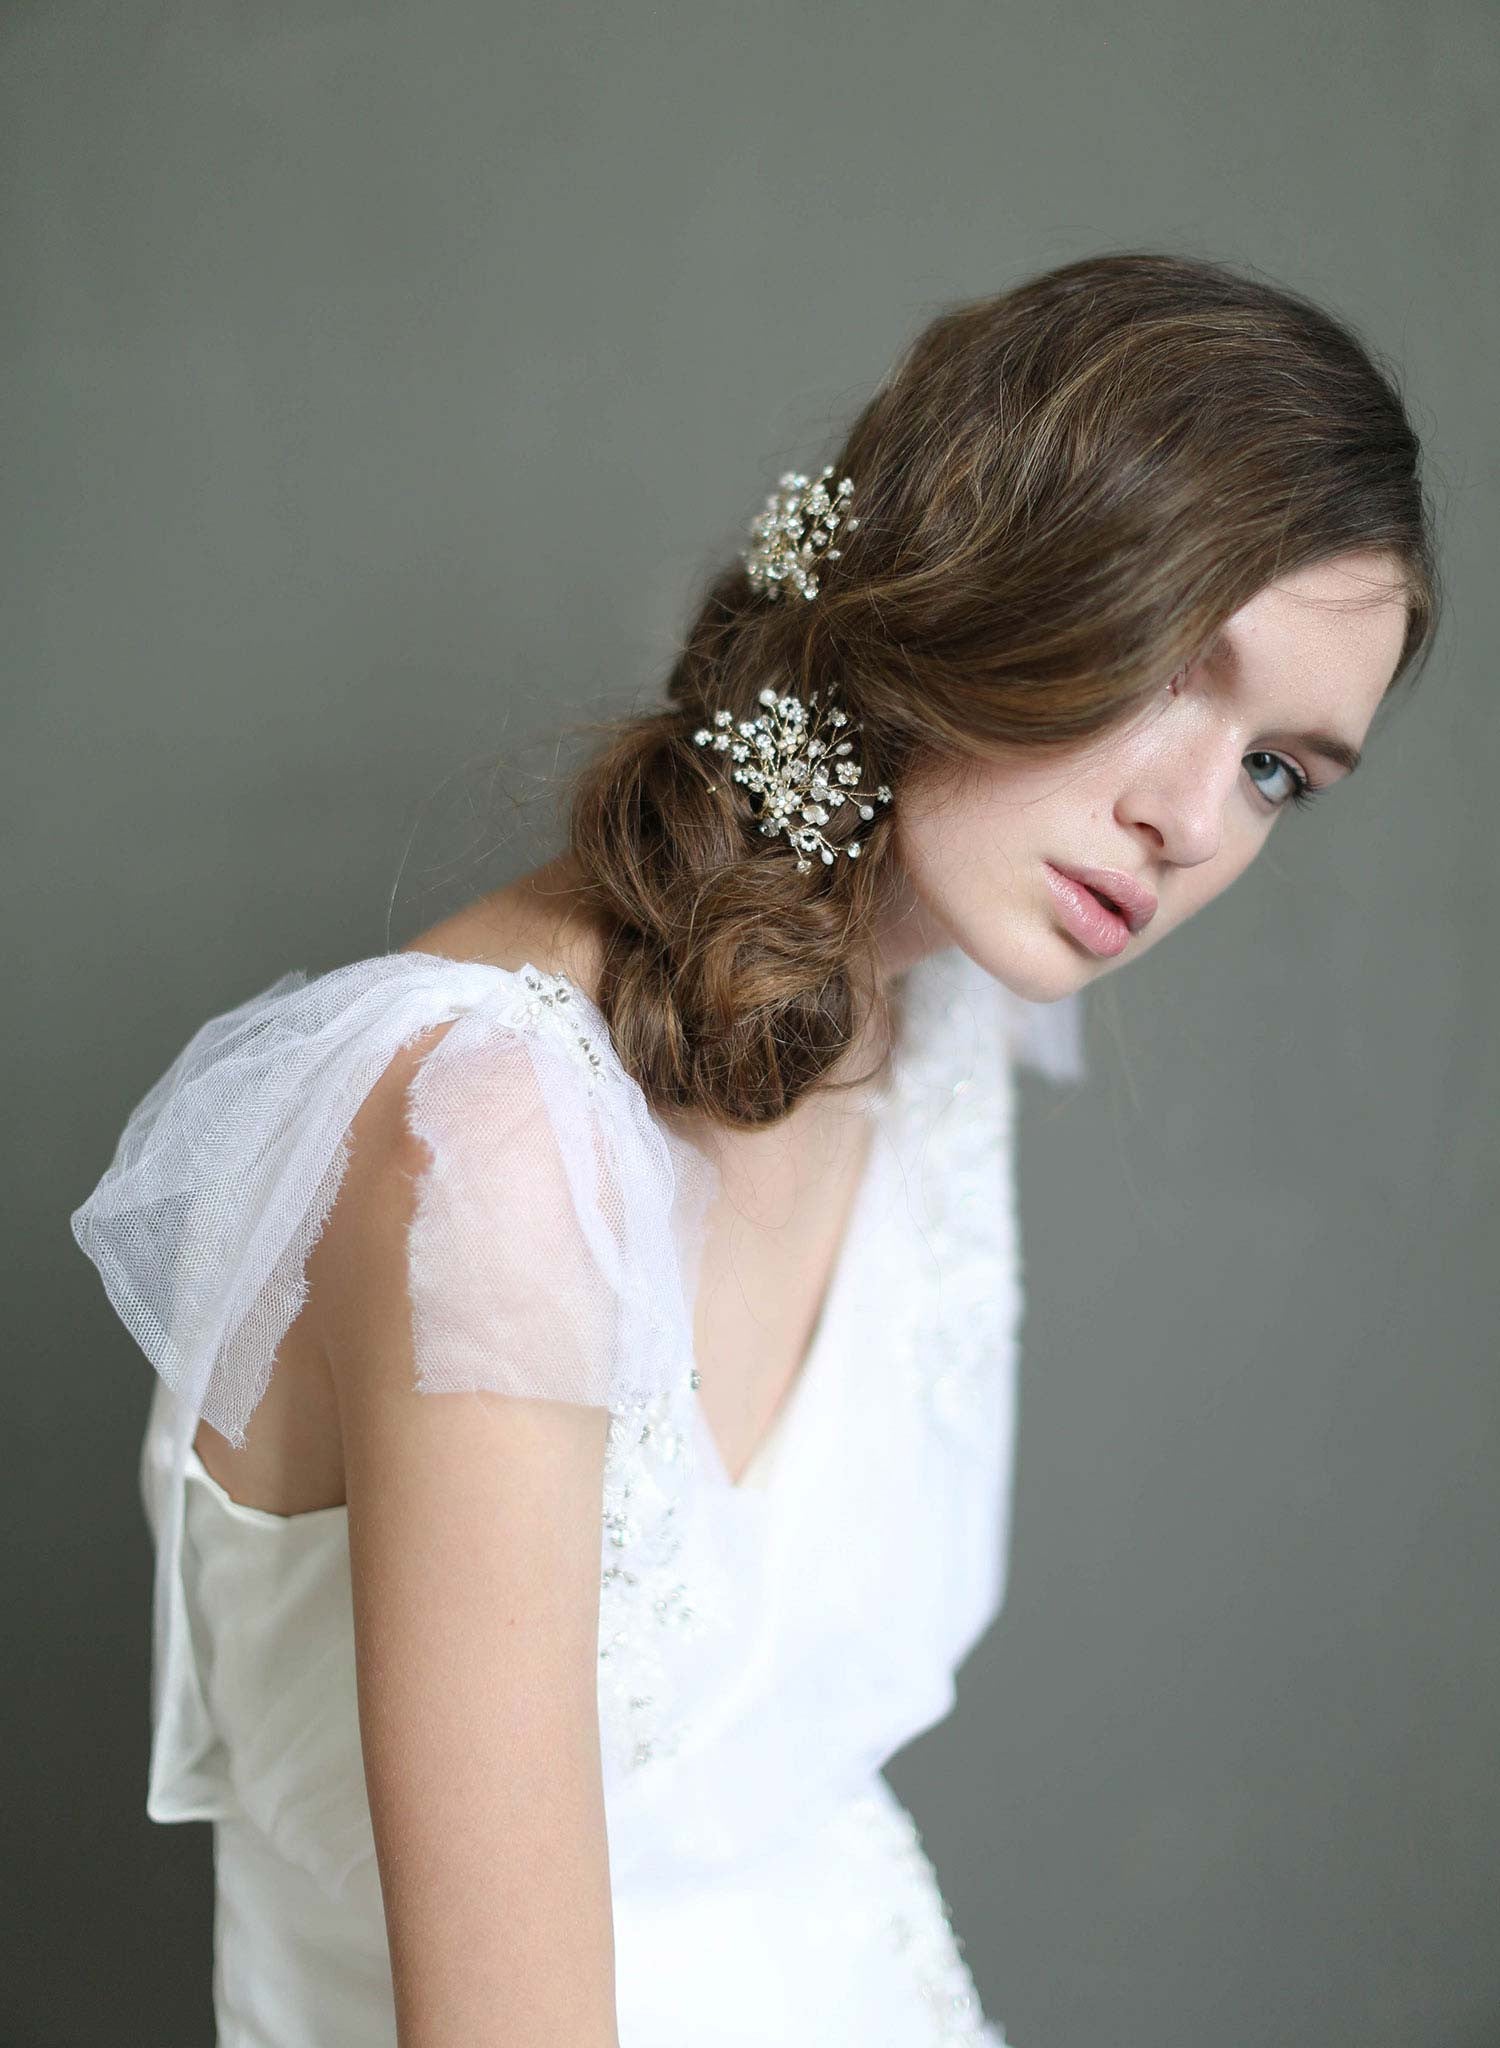 Shimmering blossom burst hair pins - Style #706